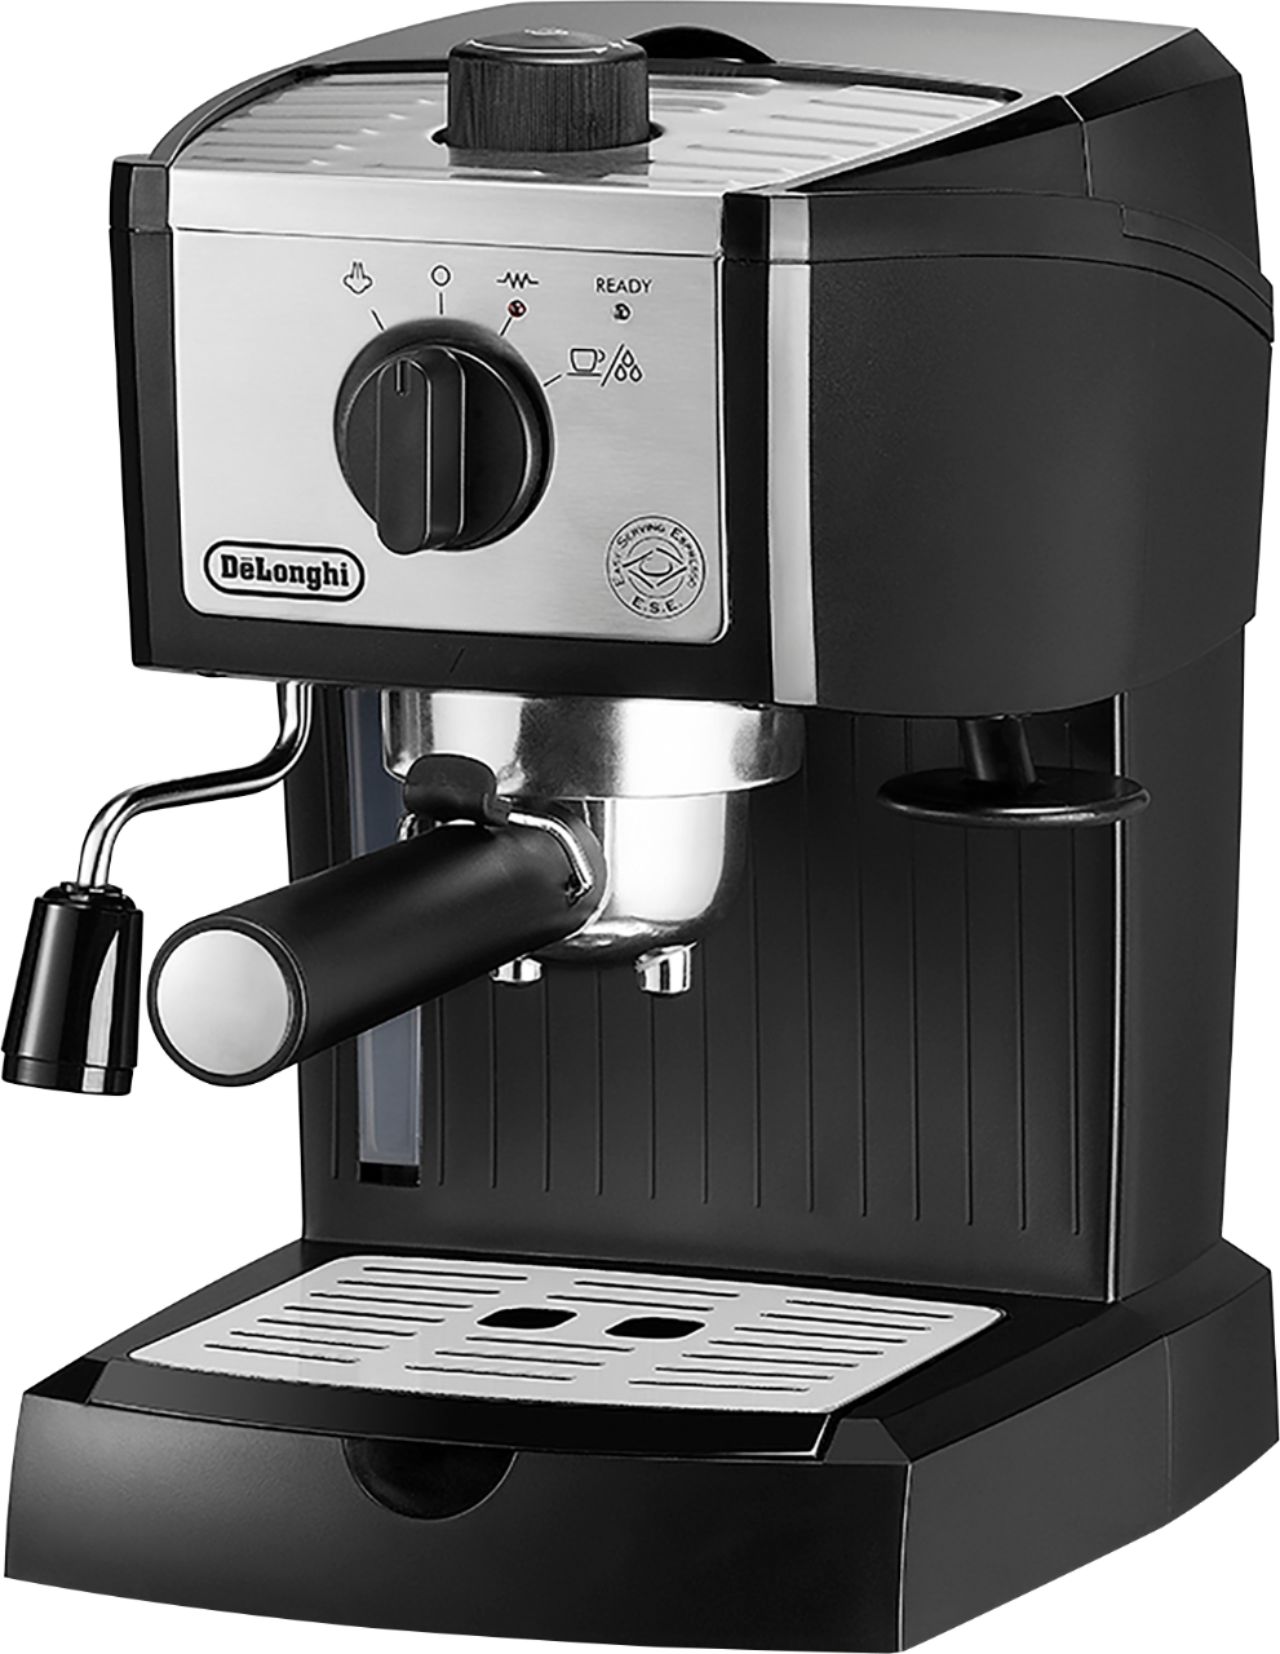 De'Longhi Espresso Machine with 15 bars of pressure and